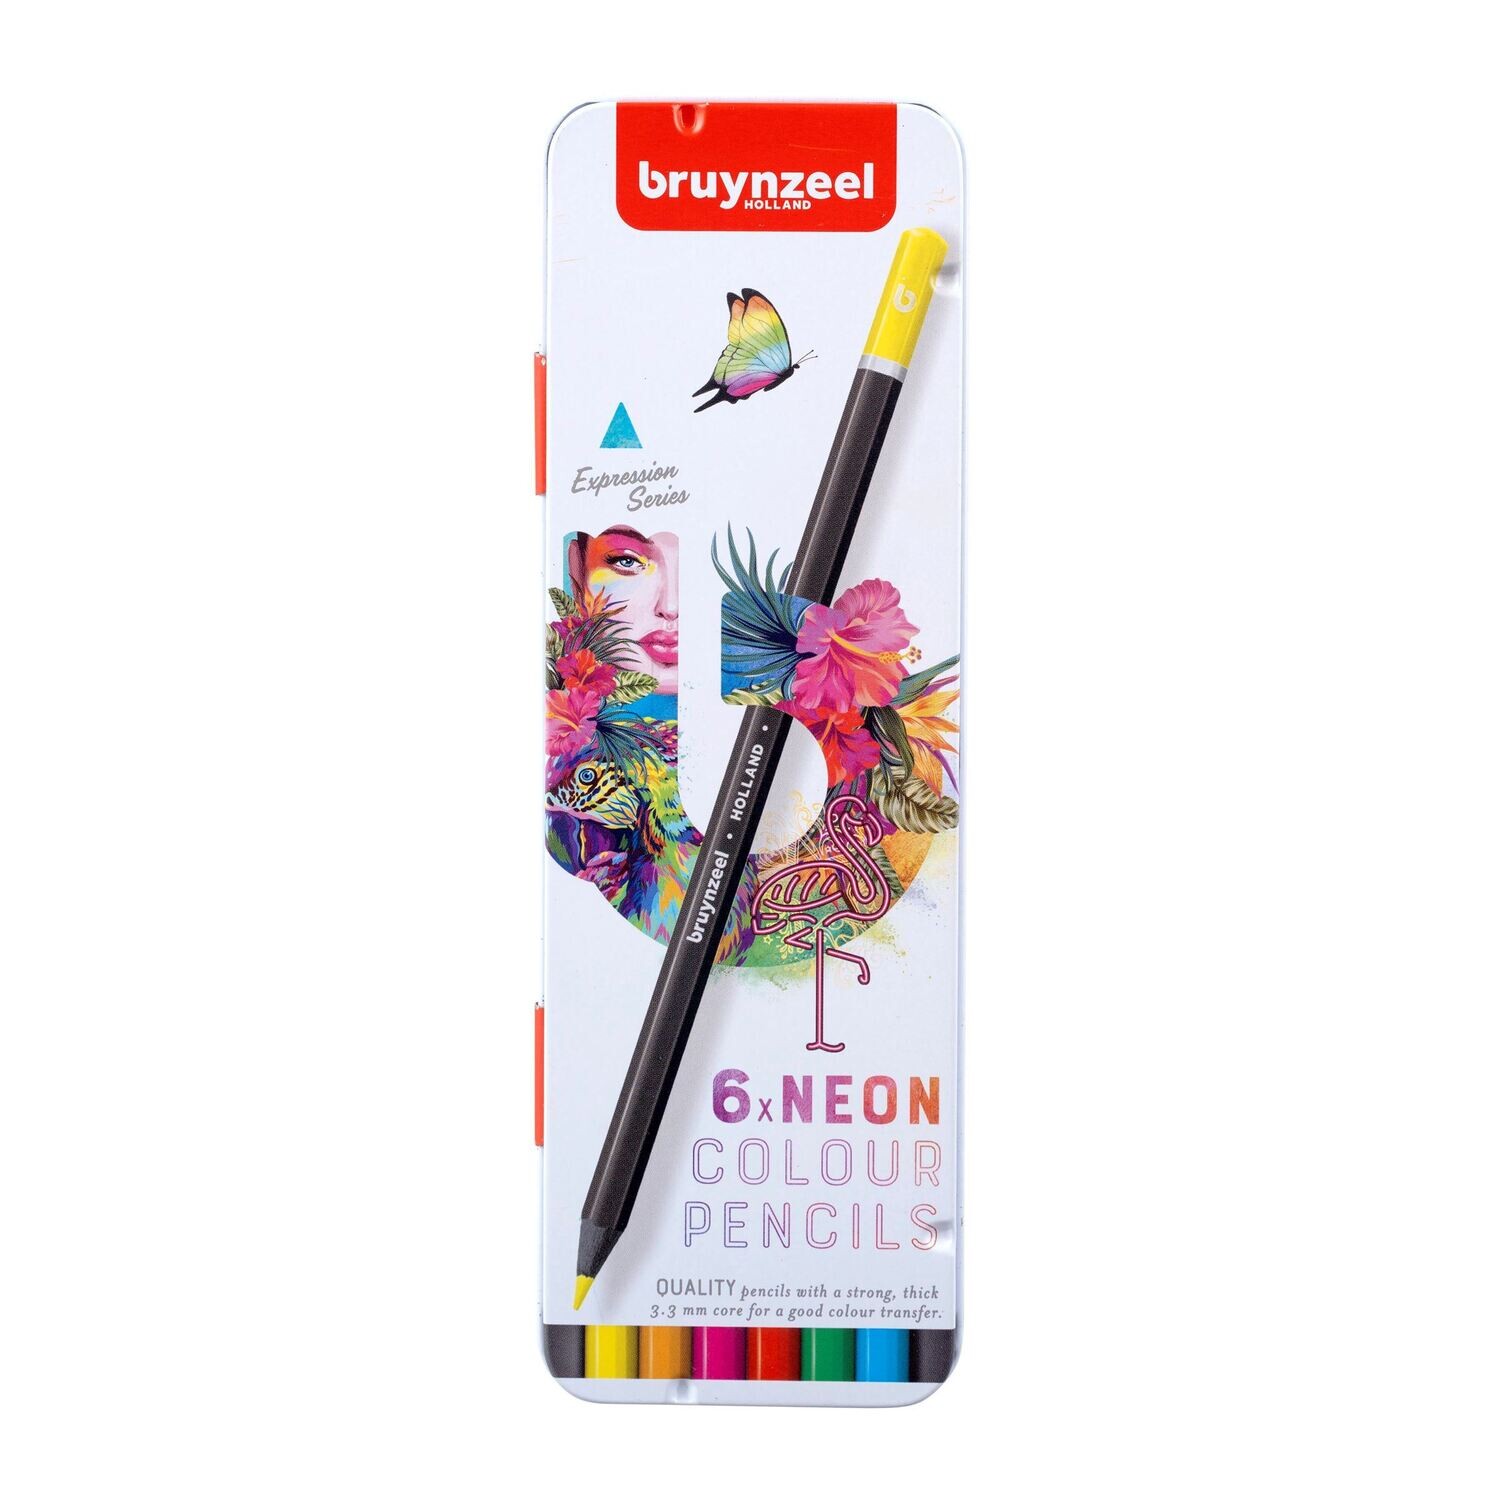 Bruynzeel 6x Neon Colour Pencils